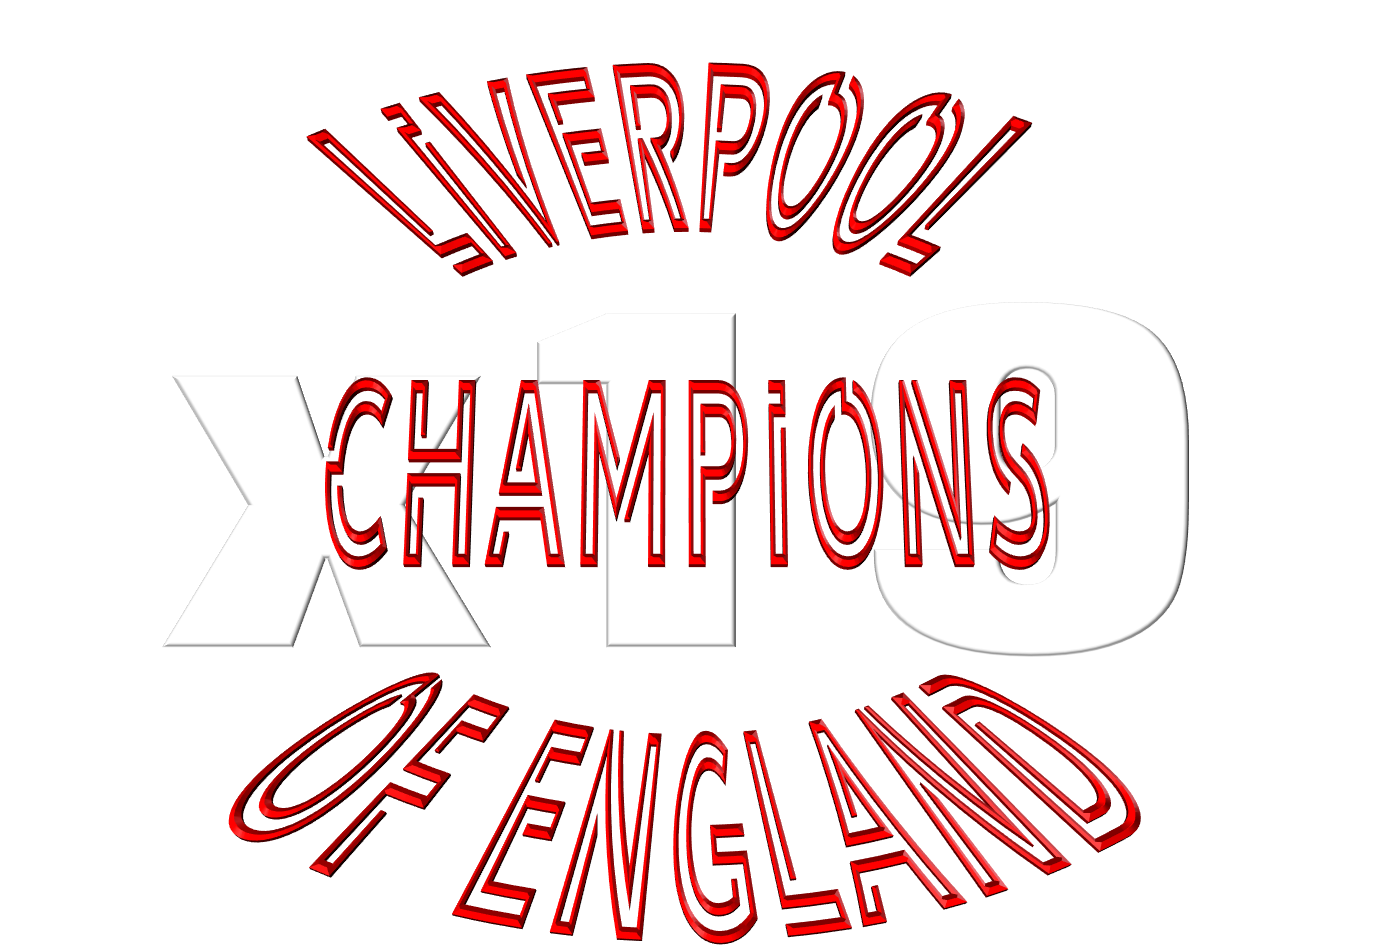 Liverpool Champions 2020